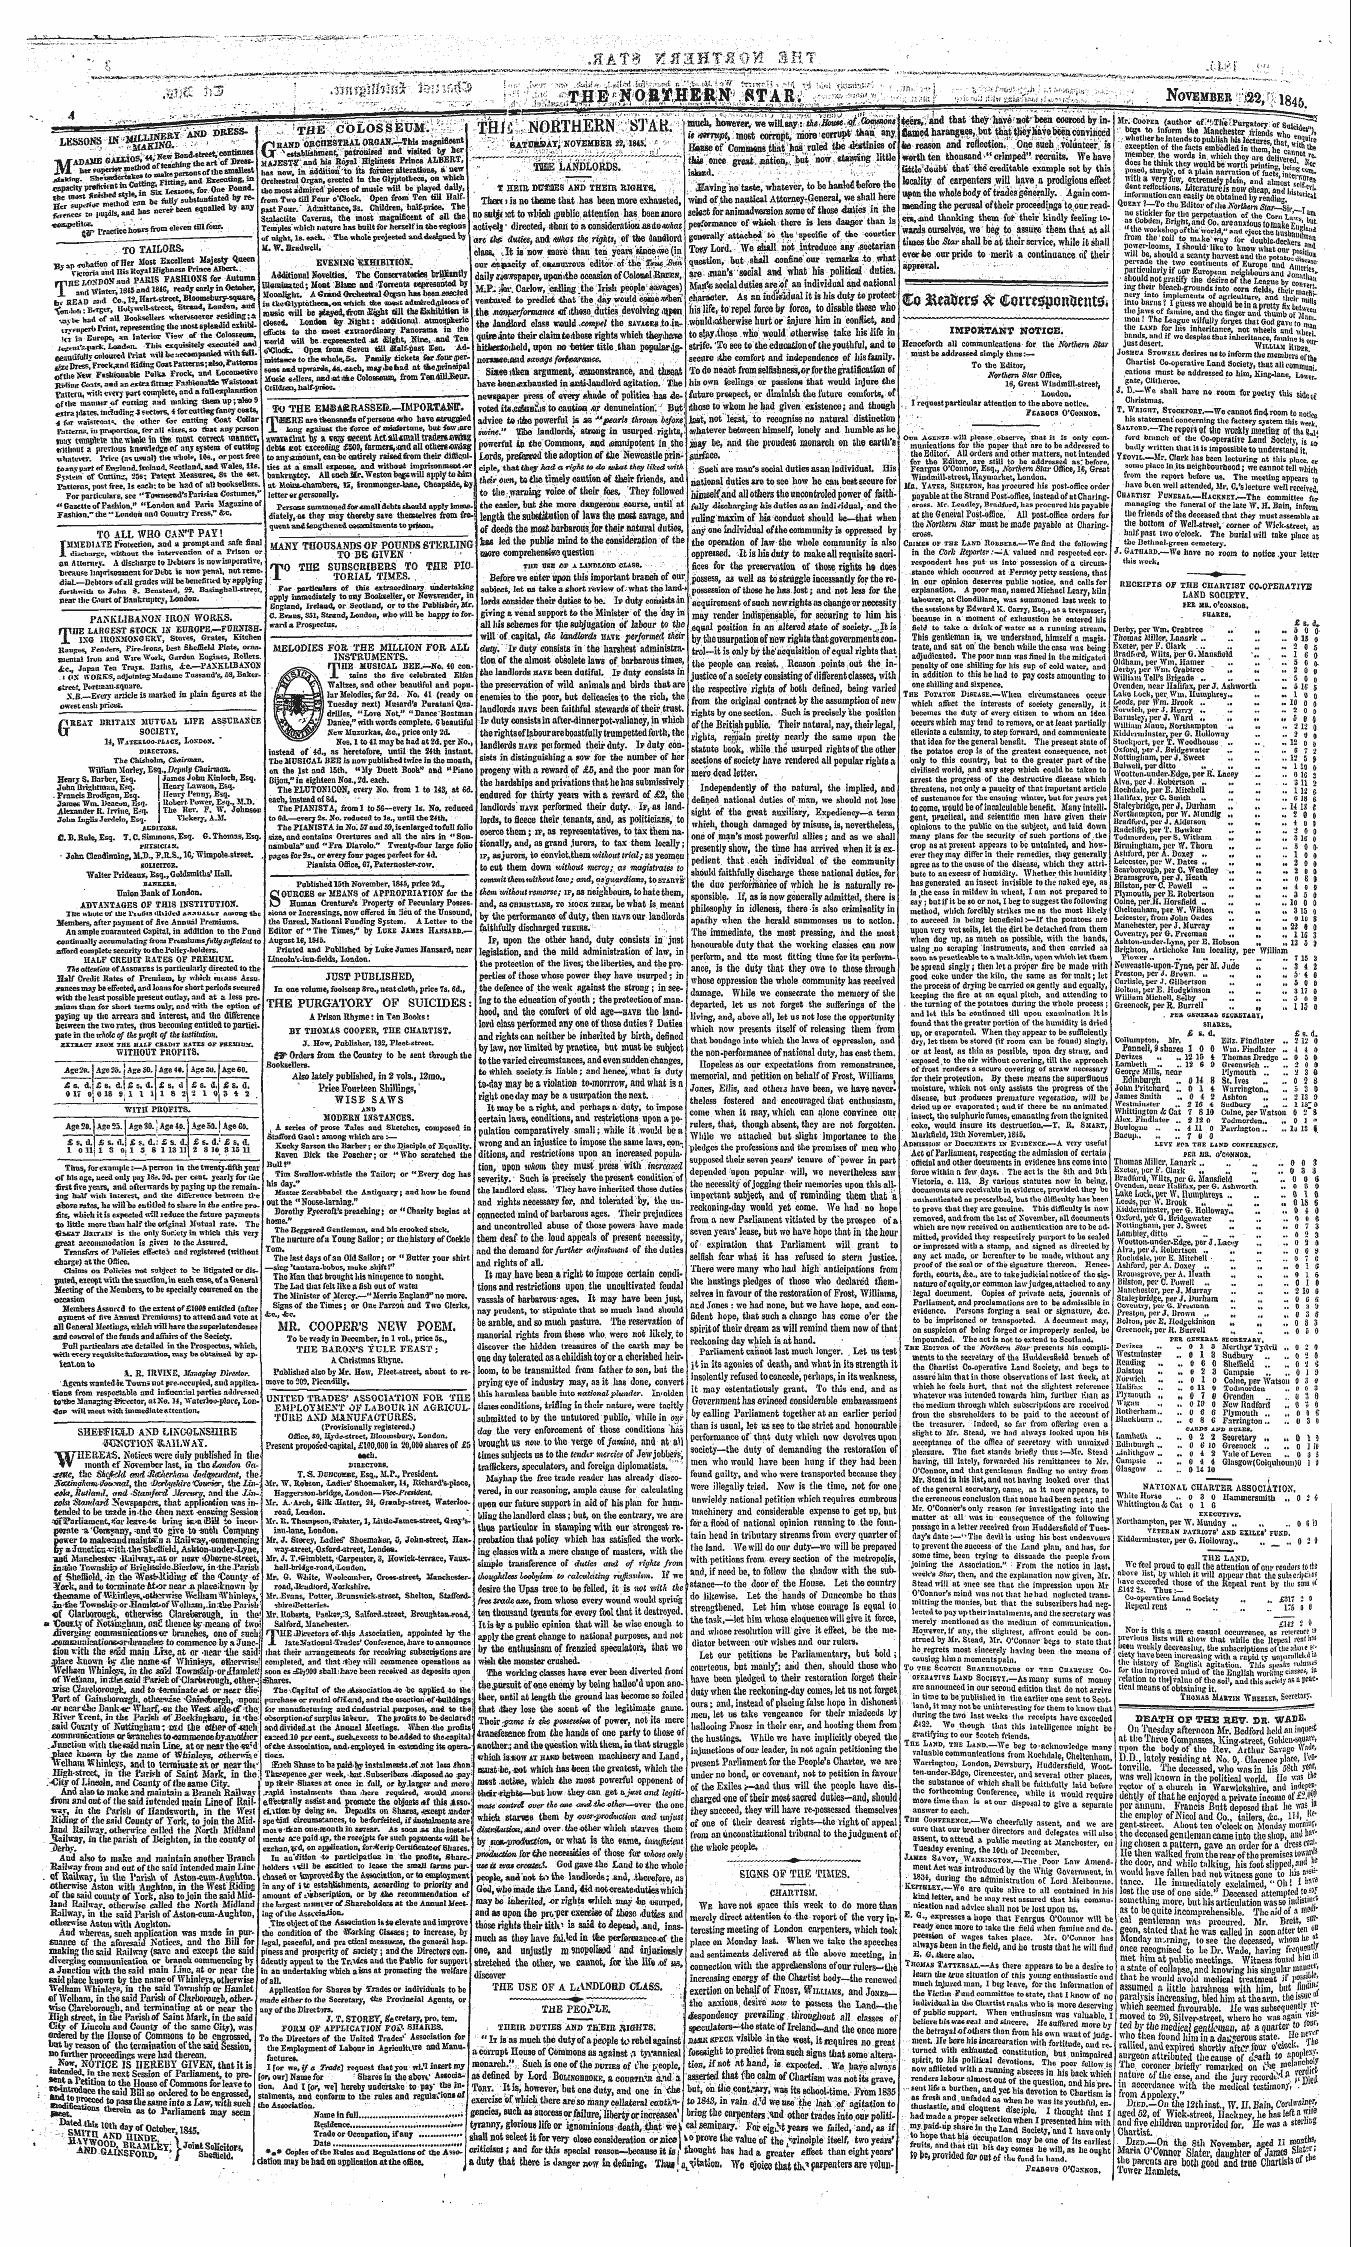 Northern Star (1837-1852): jS F Y, 3rd edition - Ad00426